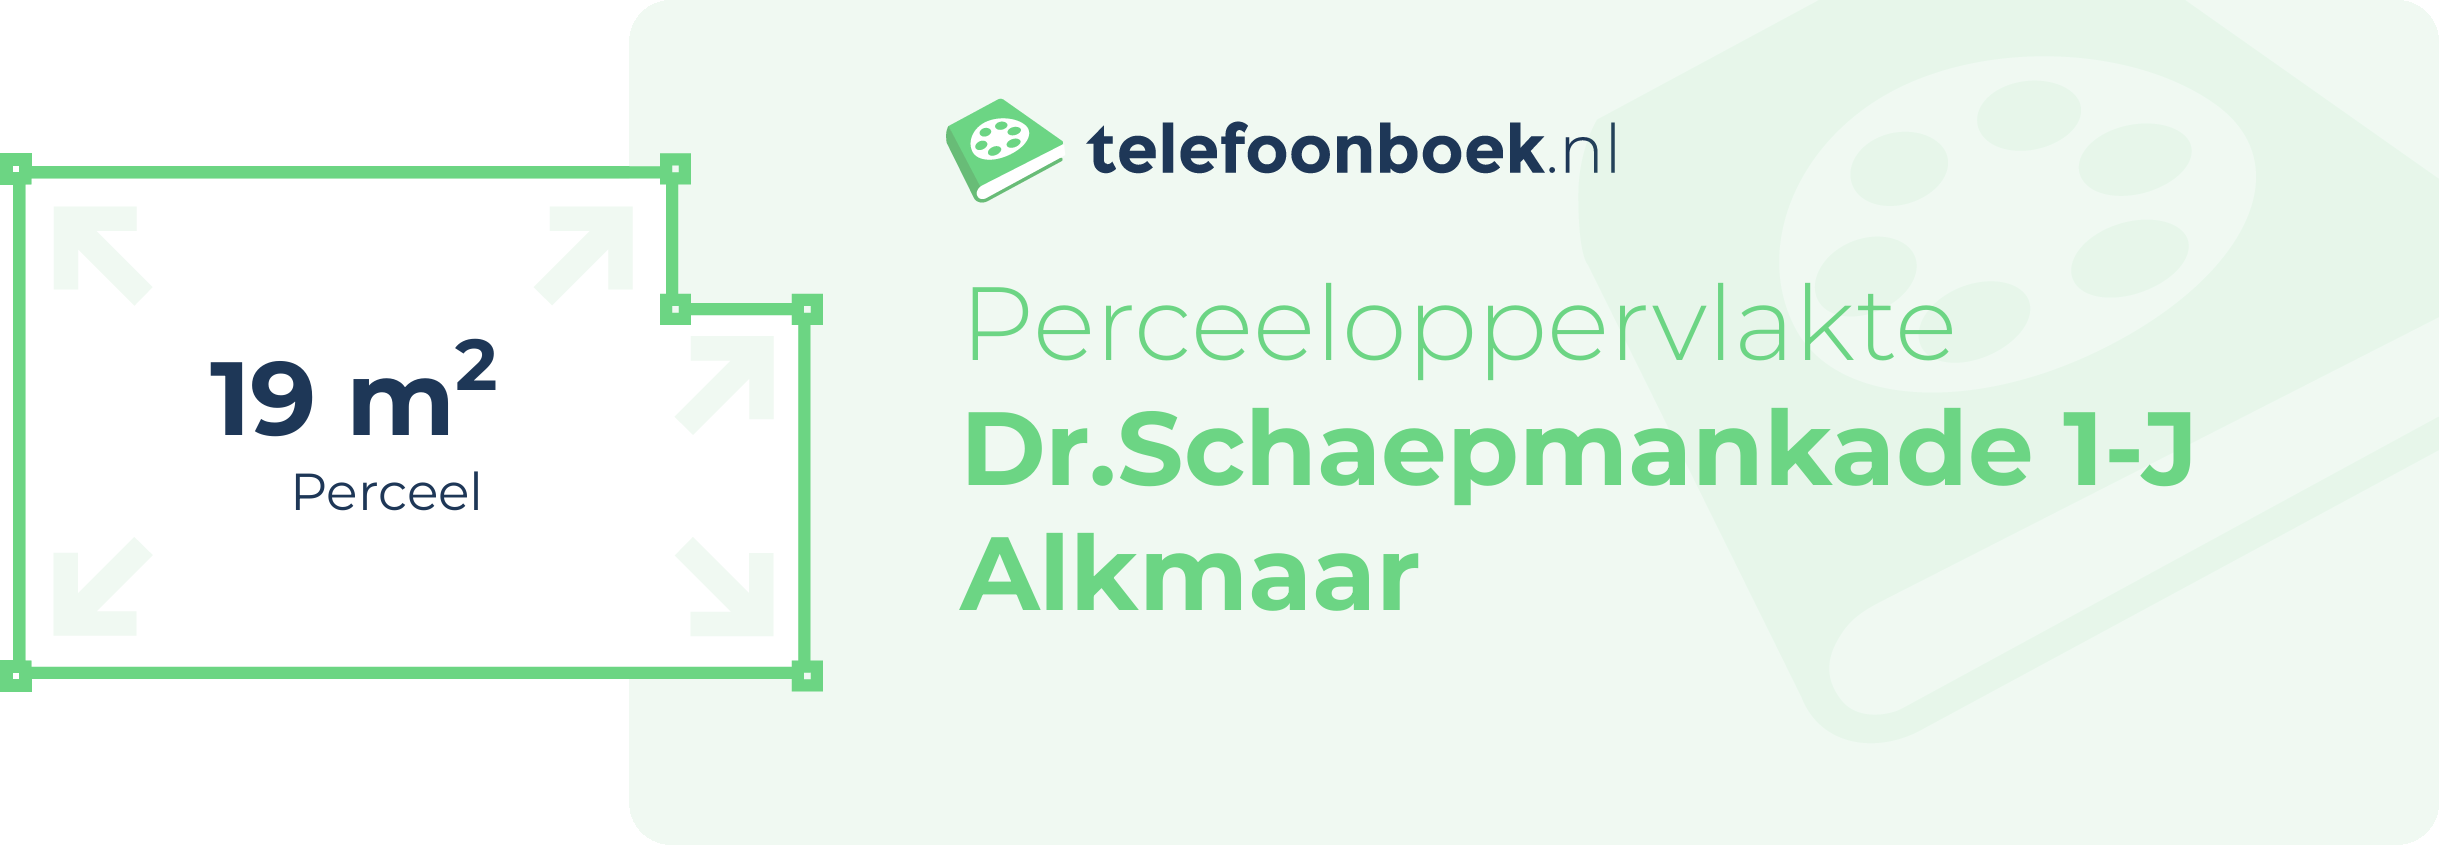 Perceeloppervlakte Dr.Schaepmankade 1-J Alkmaar